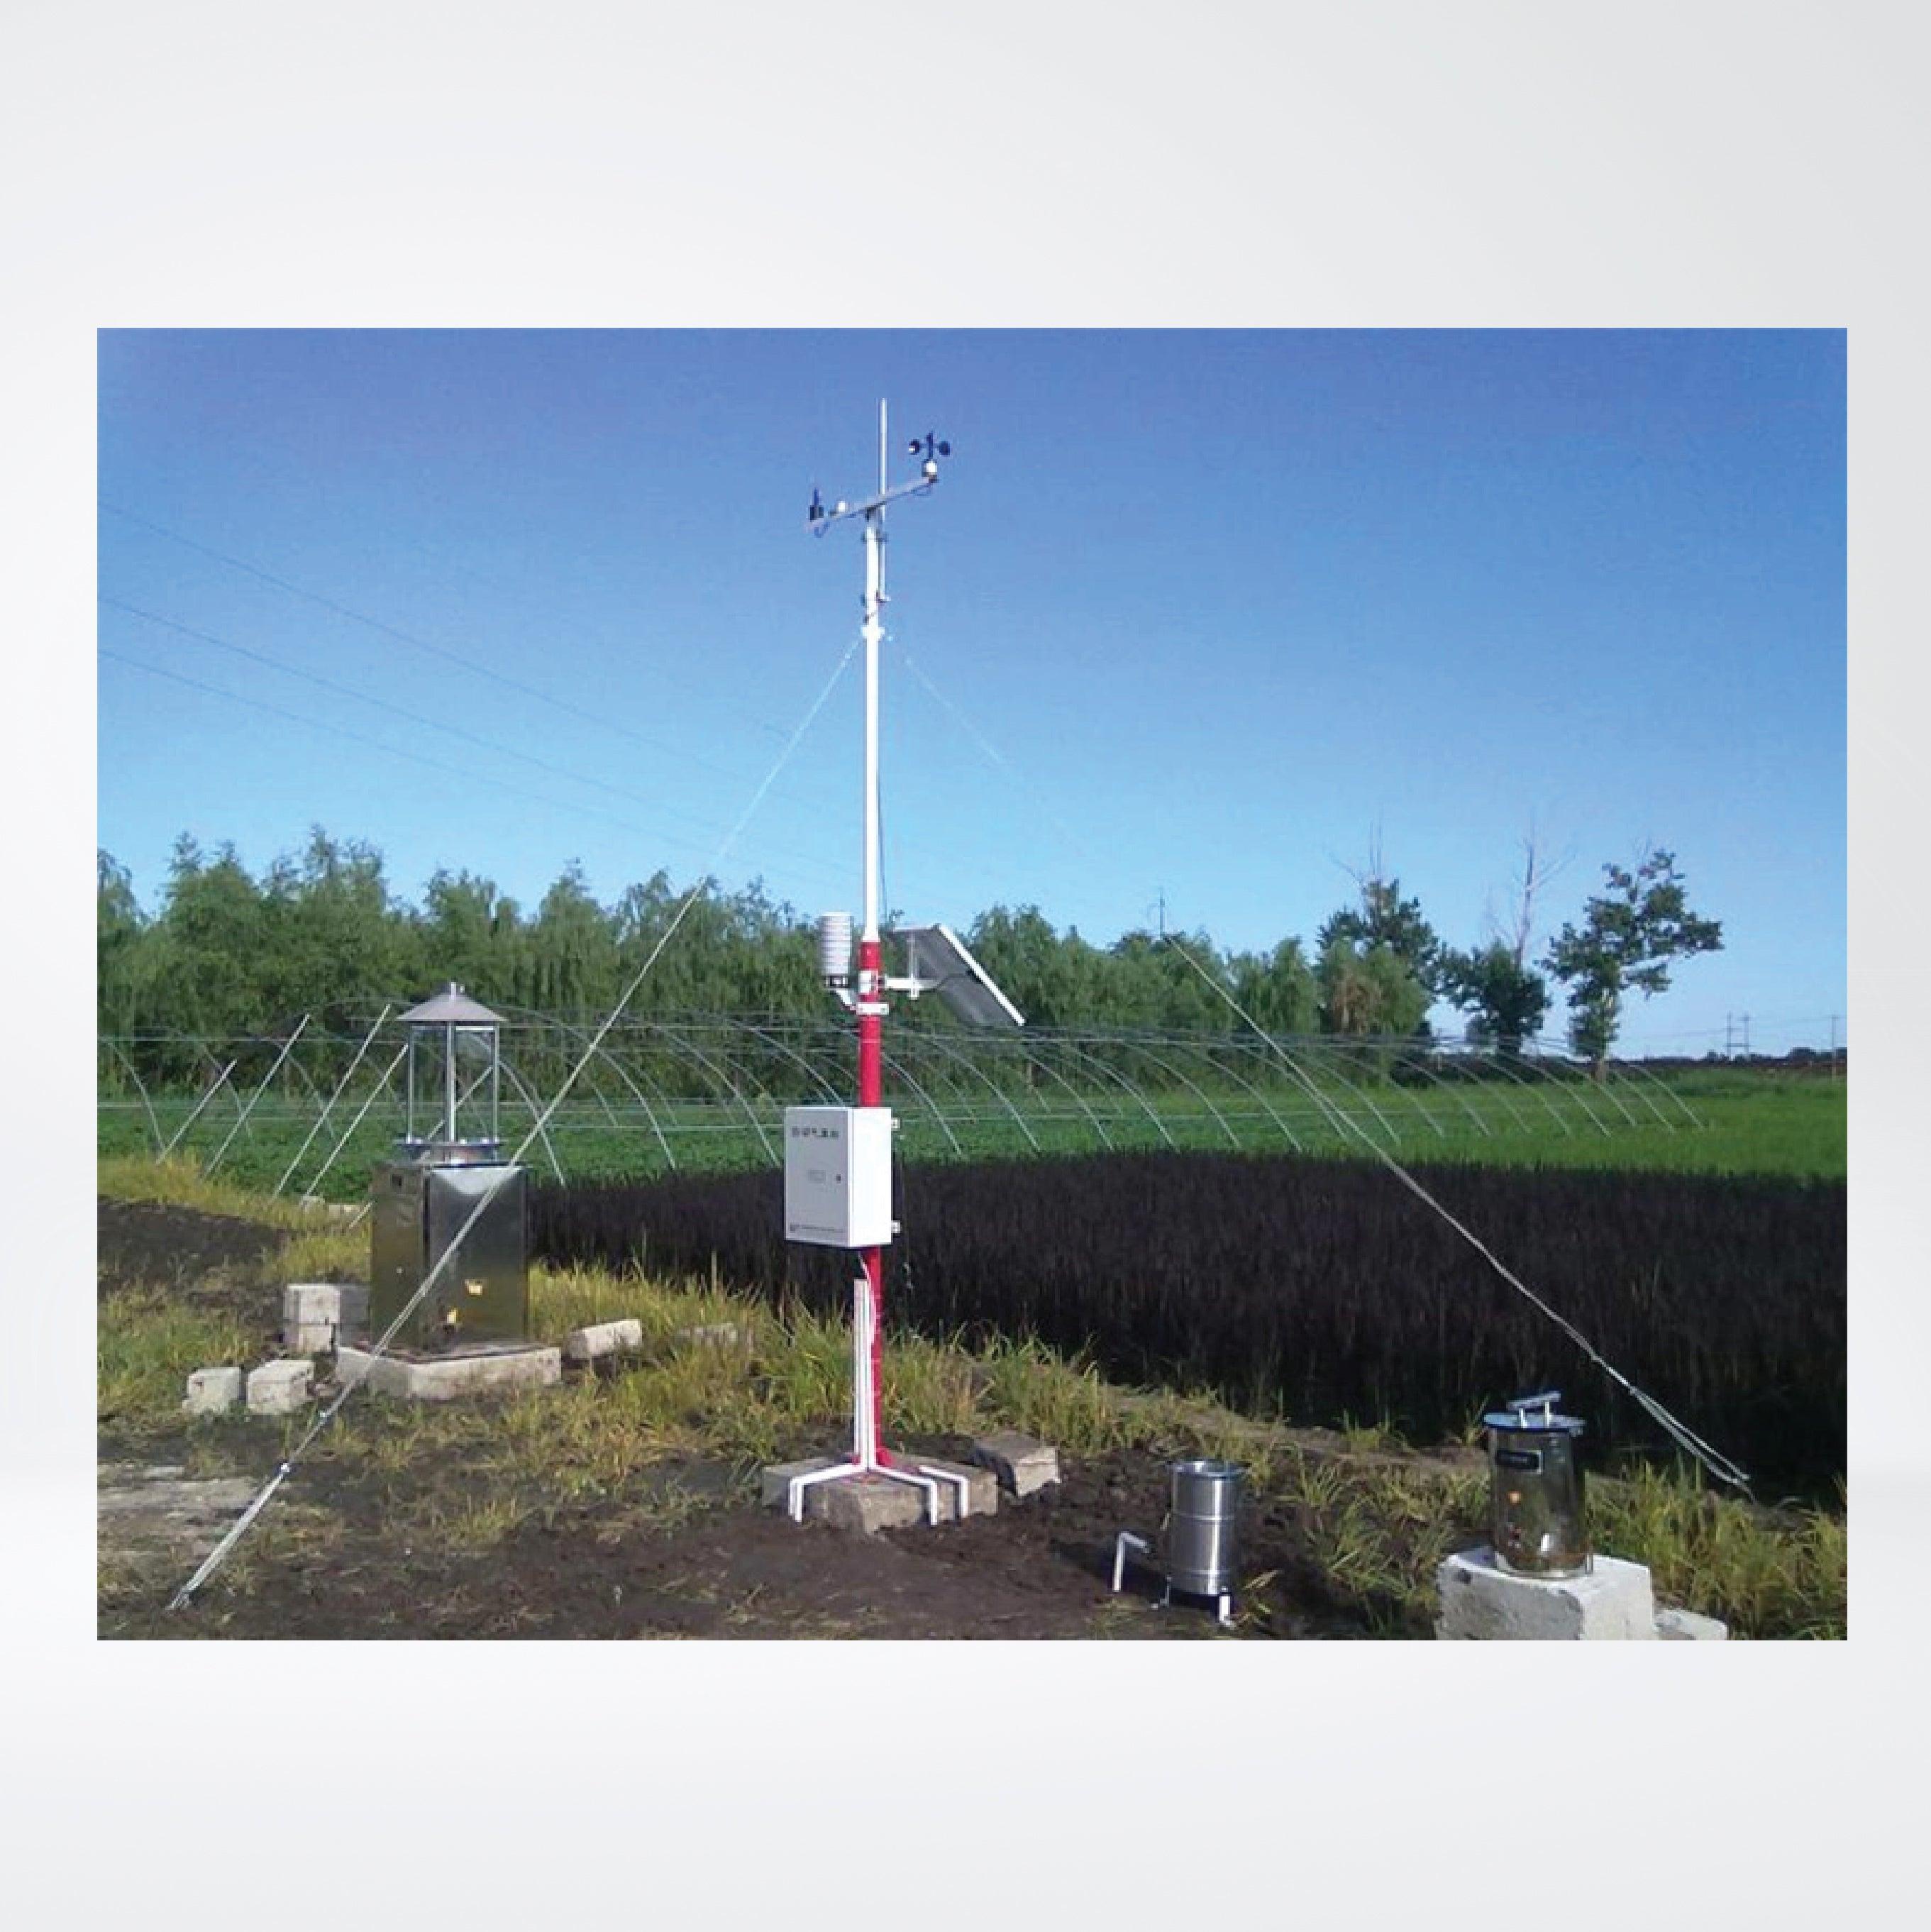 RK520-01 Soil Moisture & Temperature Sensor - Riverplus